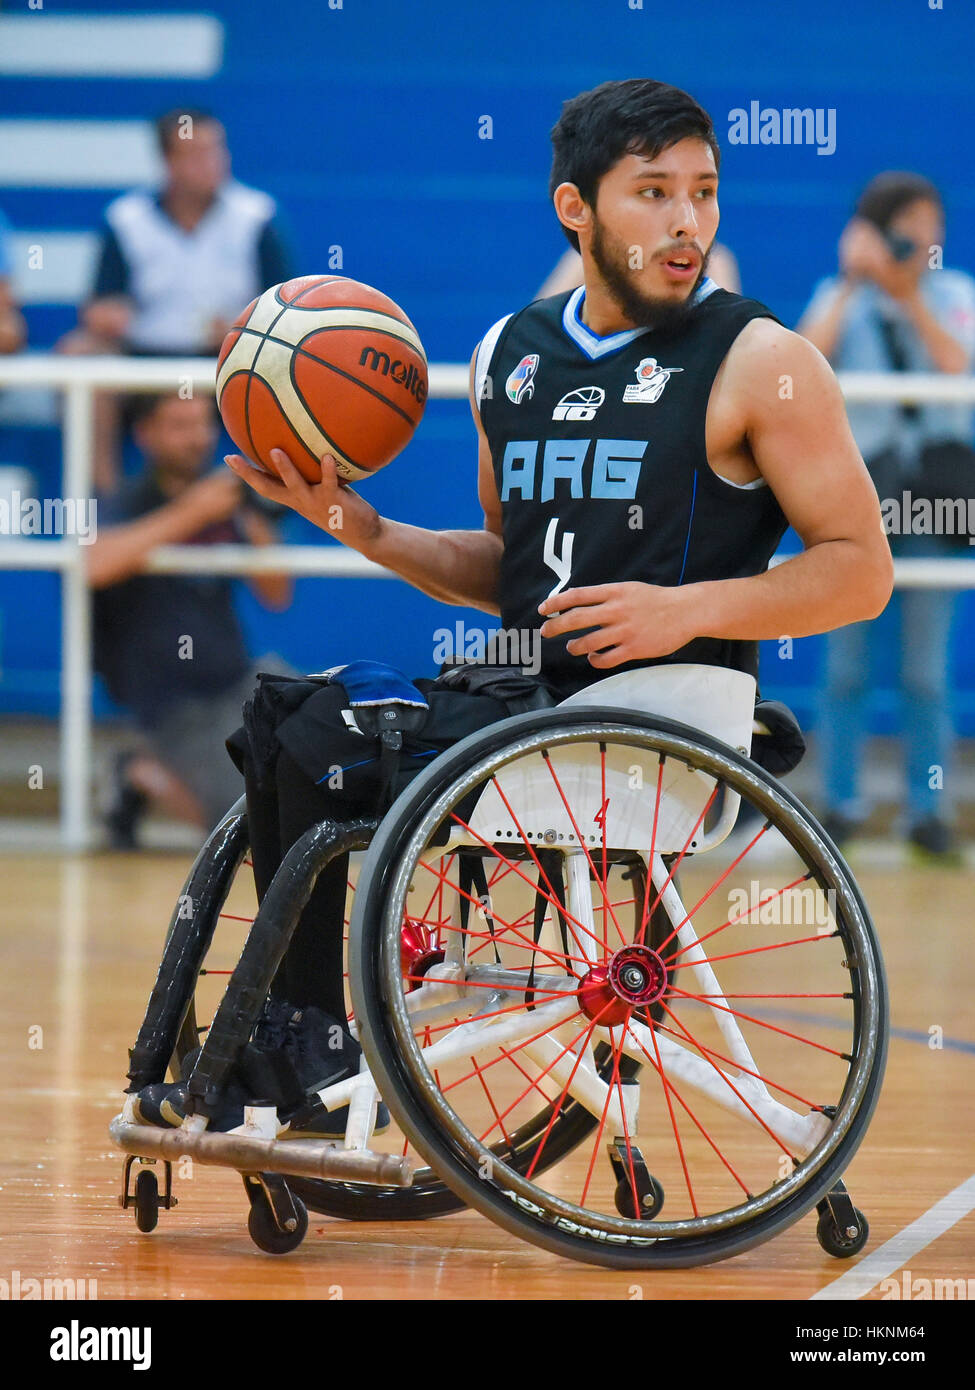 Buenos Aires, Argentina. 27 gen, 2017. Brasile - Argentina basket in carrozzella gioco durante le Americhe Championship 2017. Foto Stock